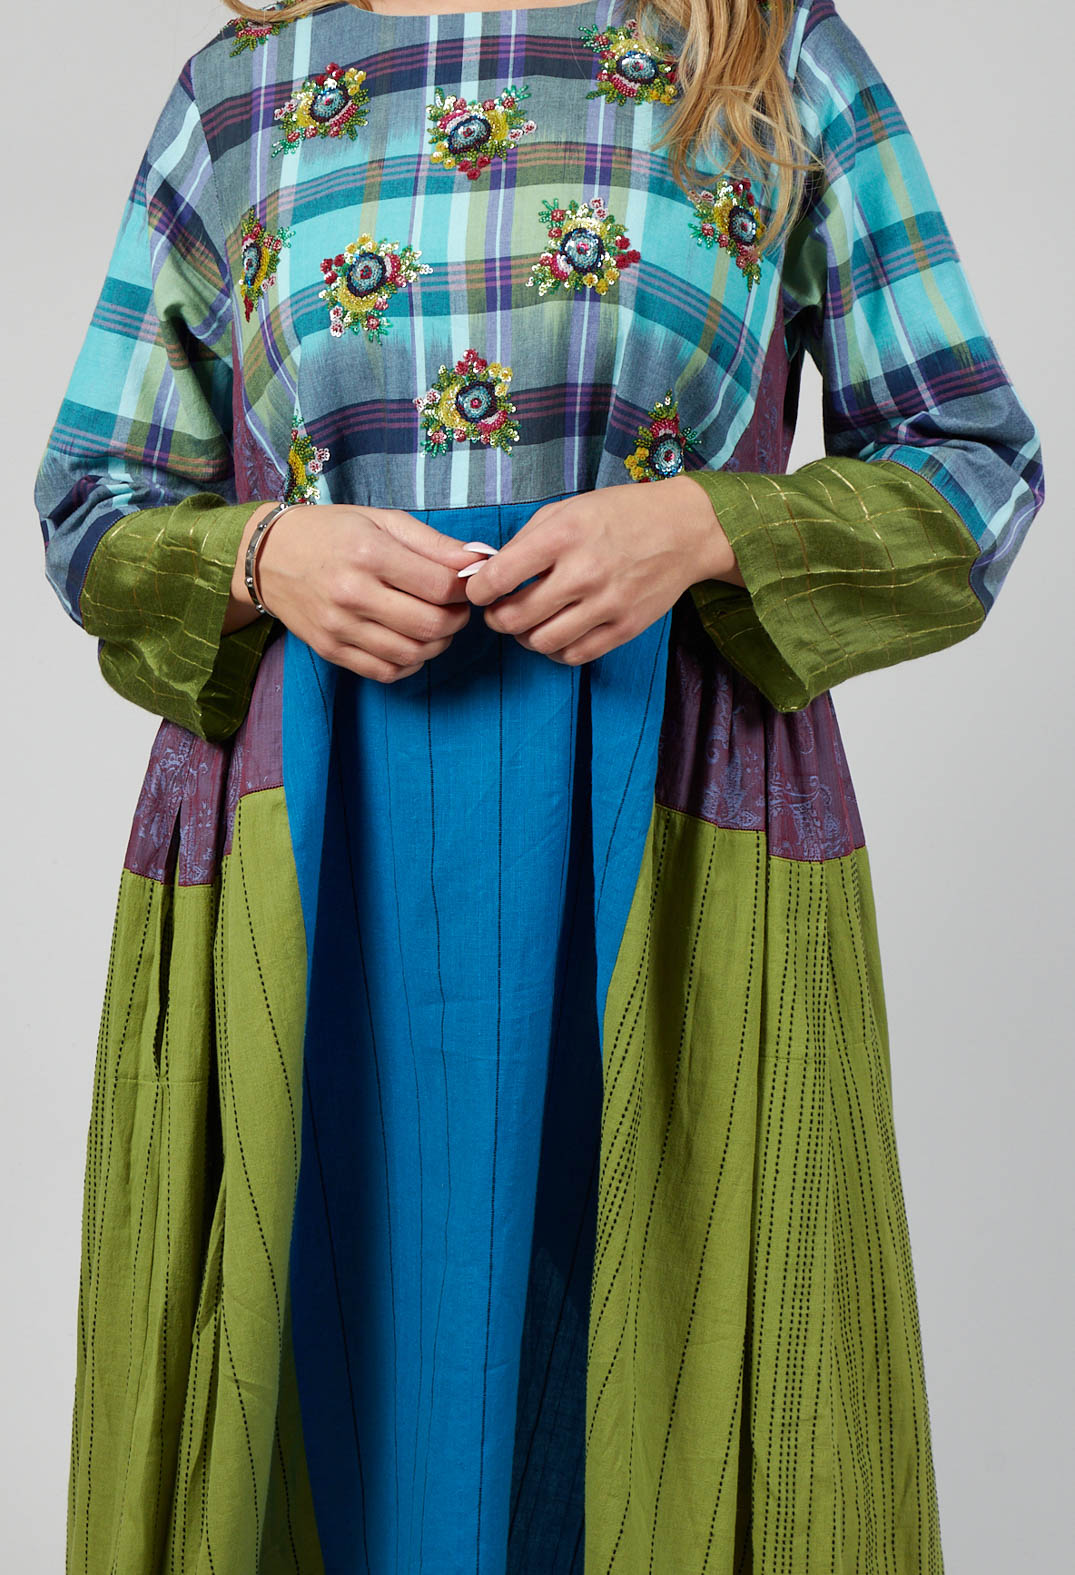 Gypsy Symphony Dress in Multicolour